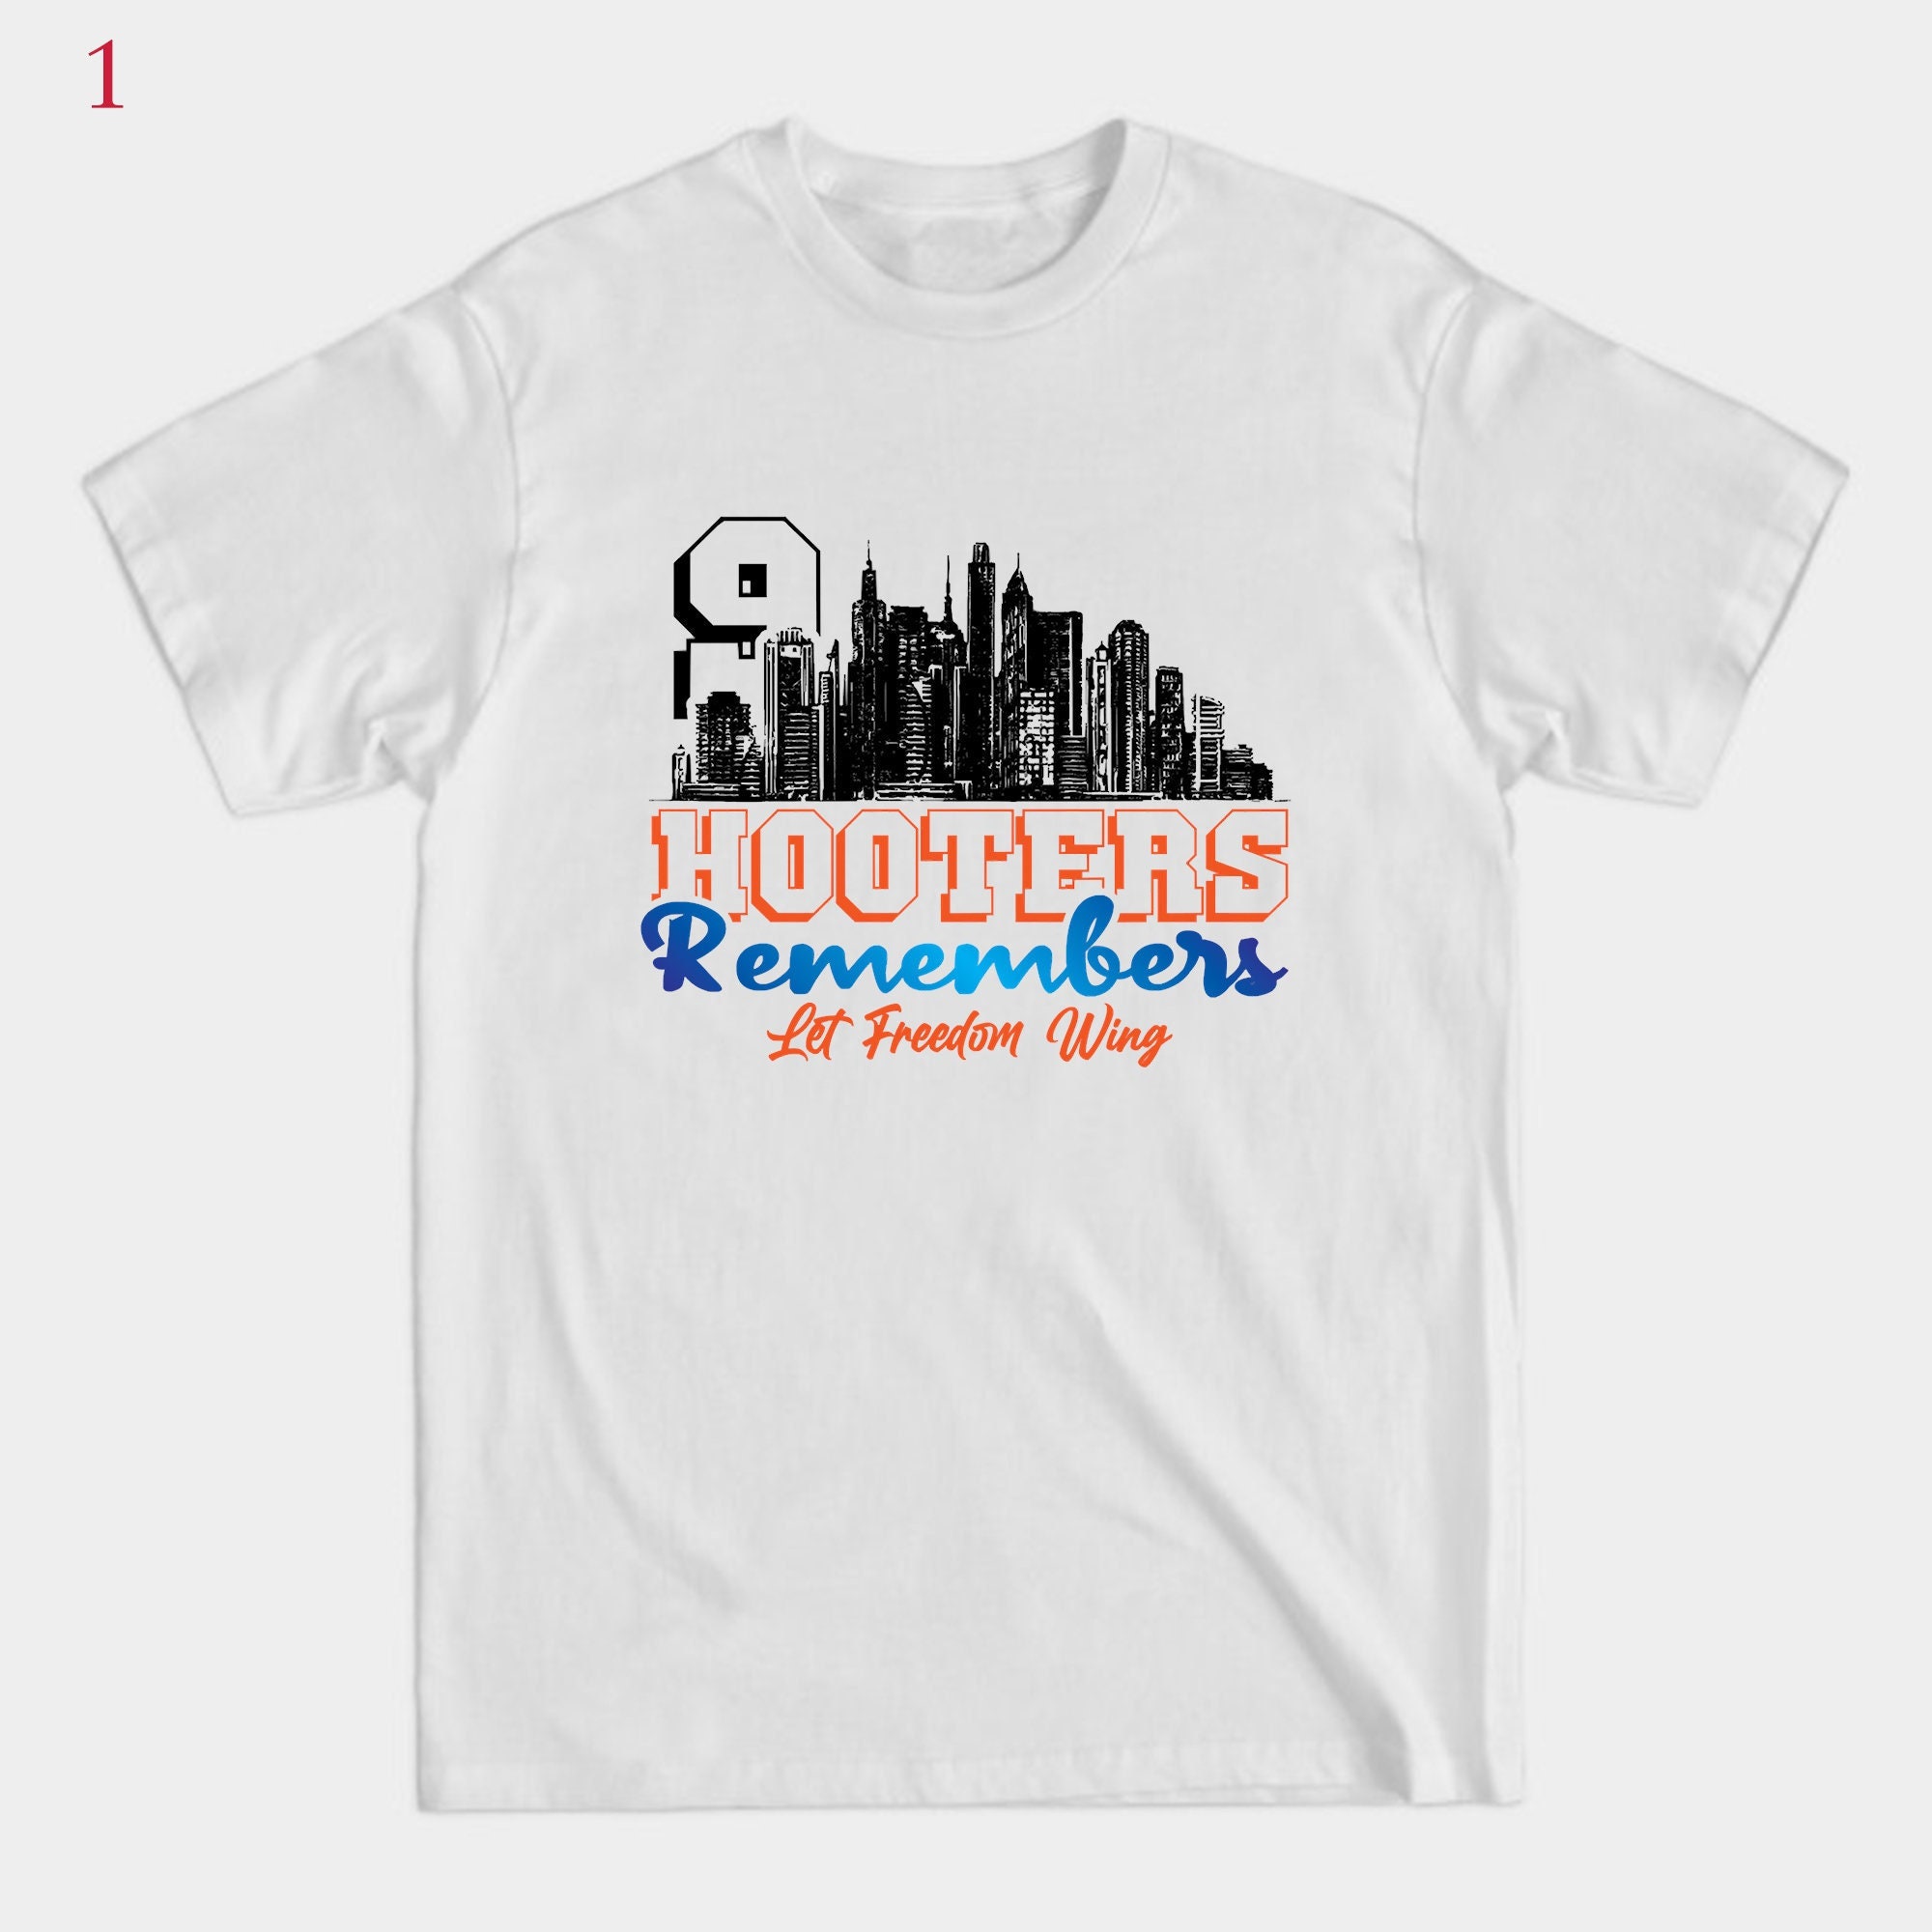 911 Hooters Shirt Remembers Let Freedom Wing Sweatshirt